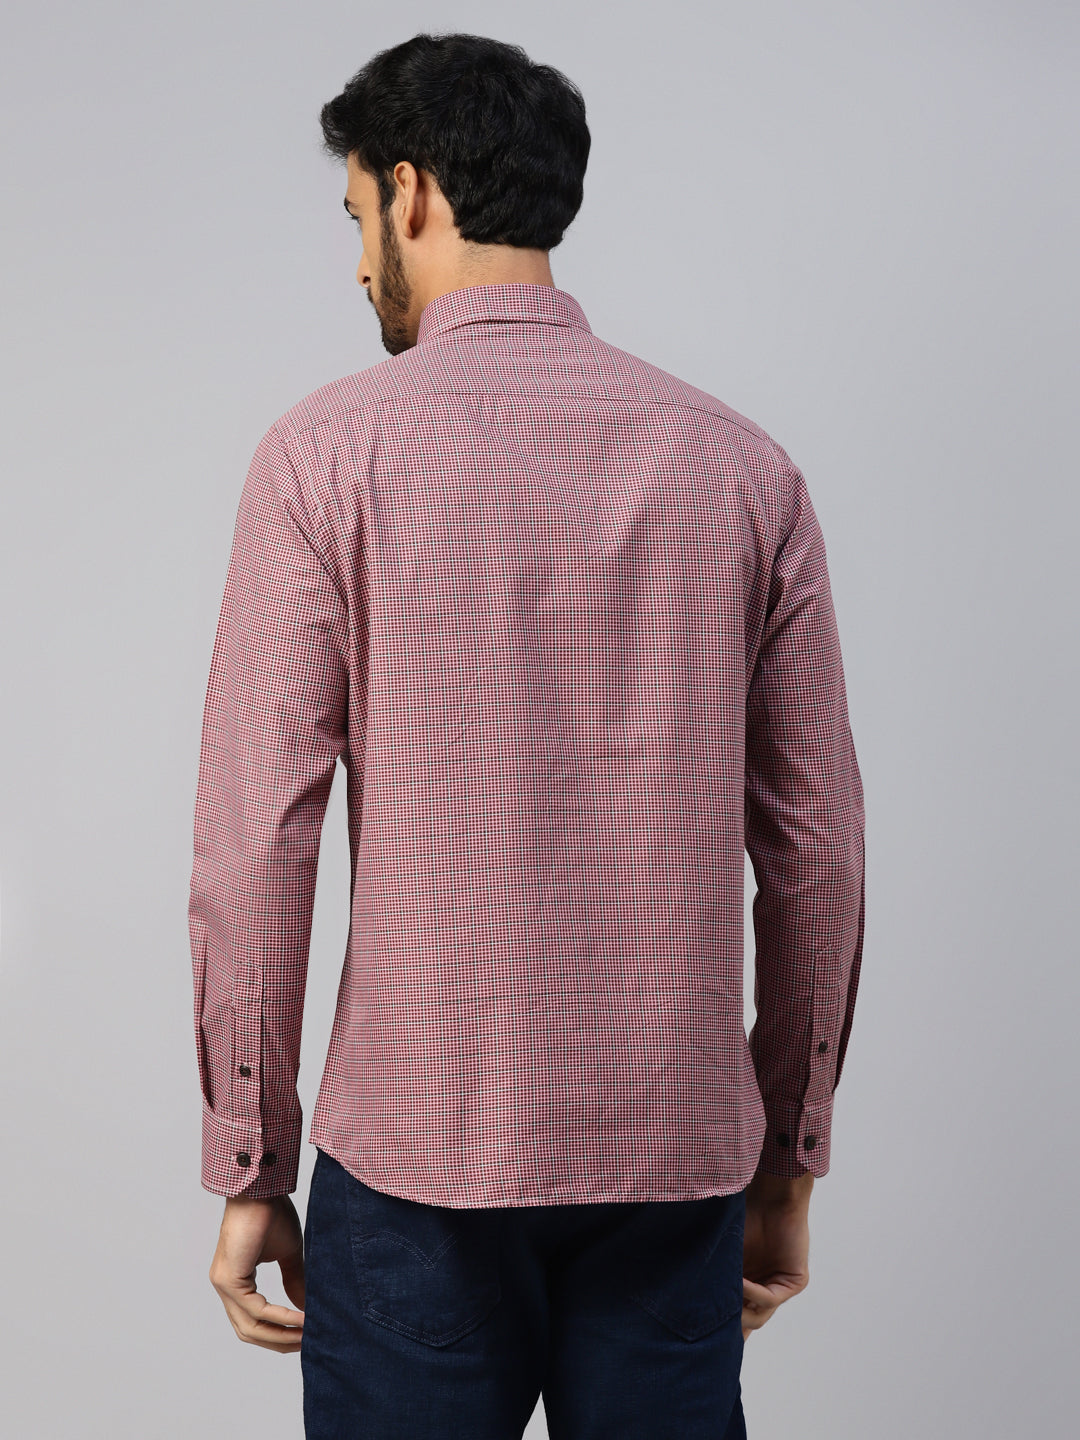 Men's Brown & Pink Checks Casual Shirt